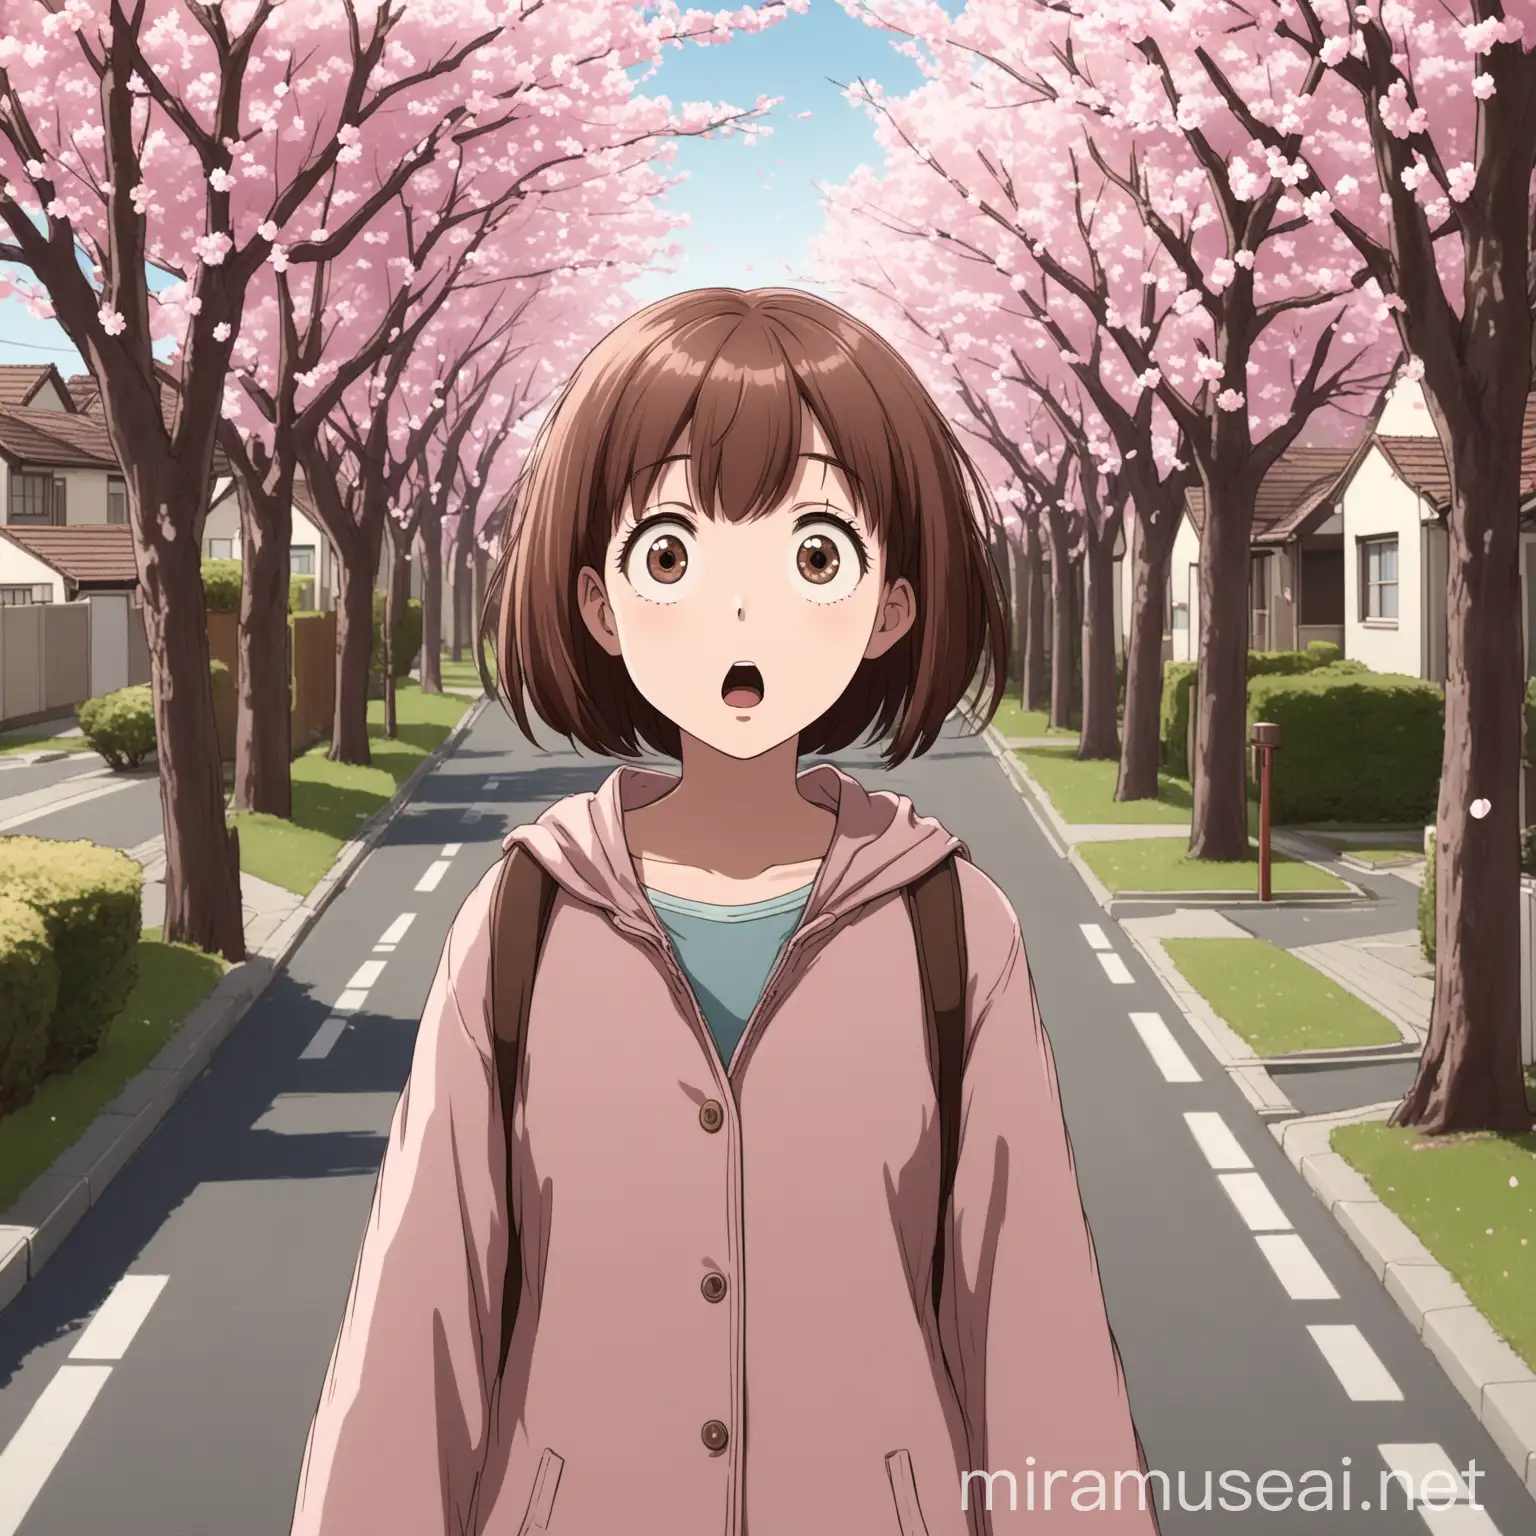 Surprised Girl on Cherry BlossomLined Suburban Street